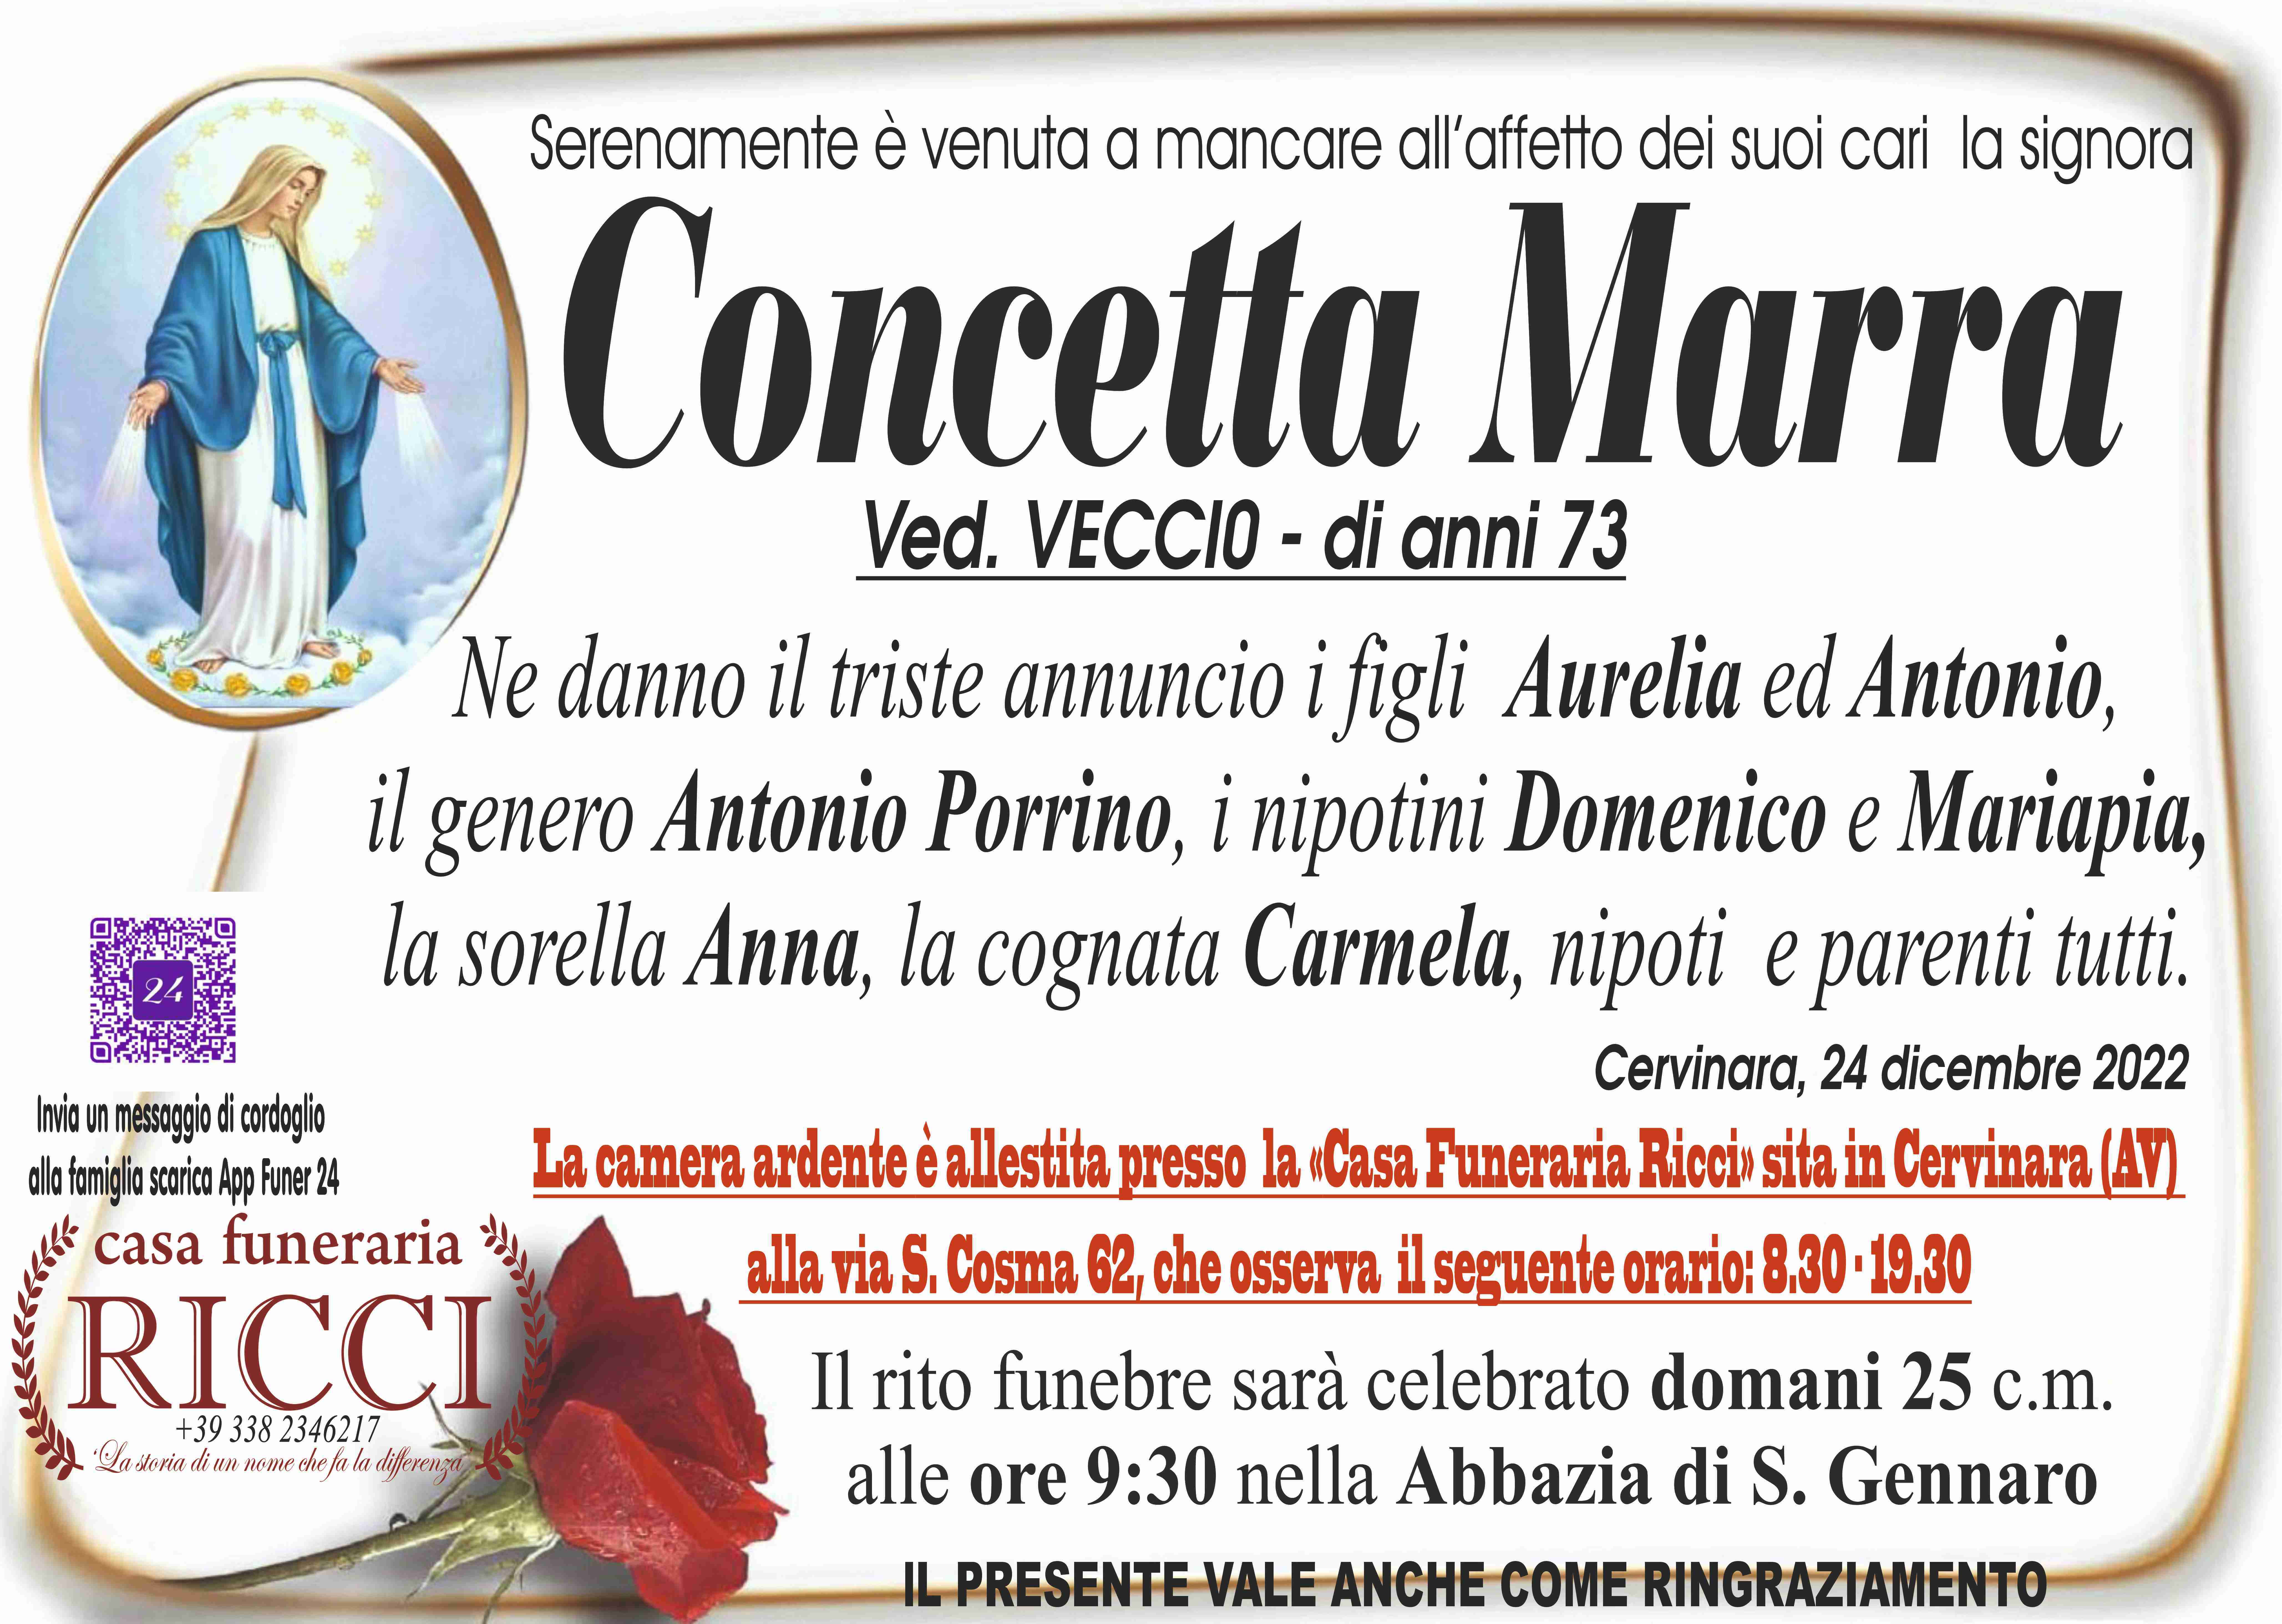 Concetta Marra